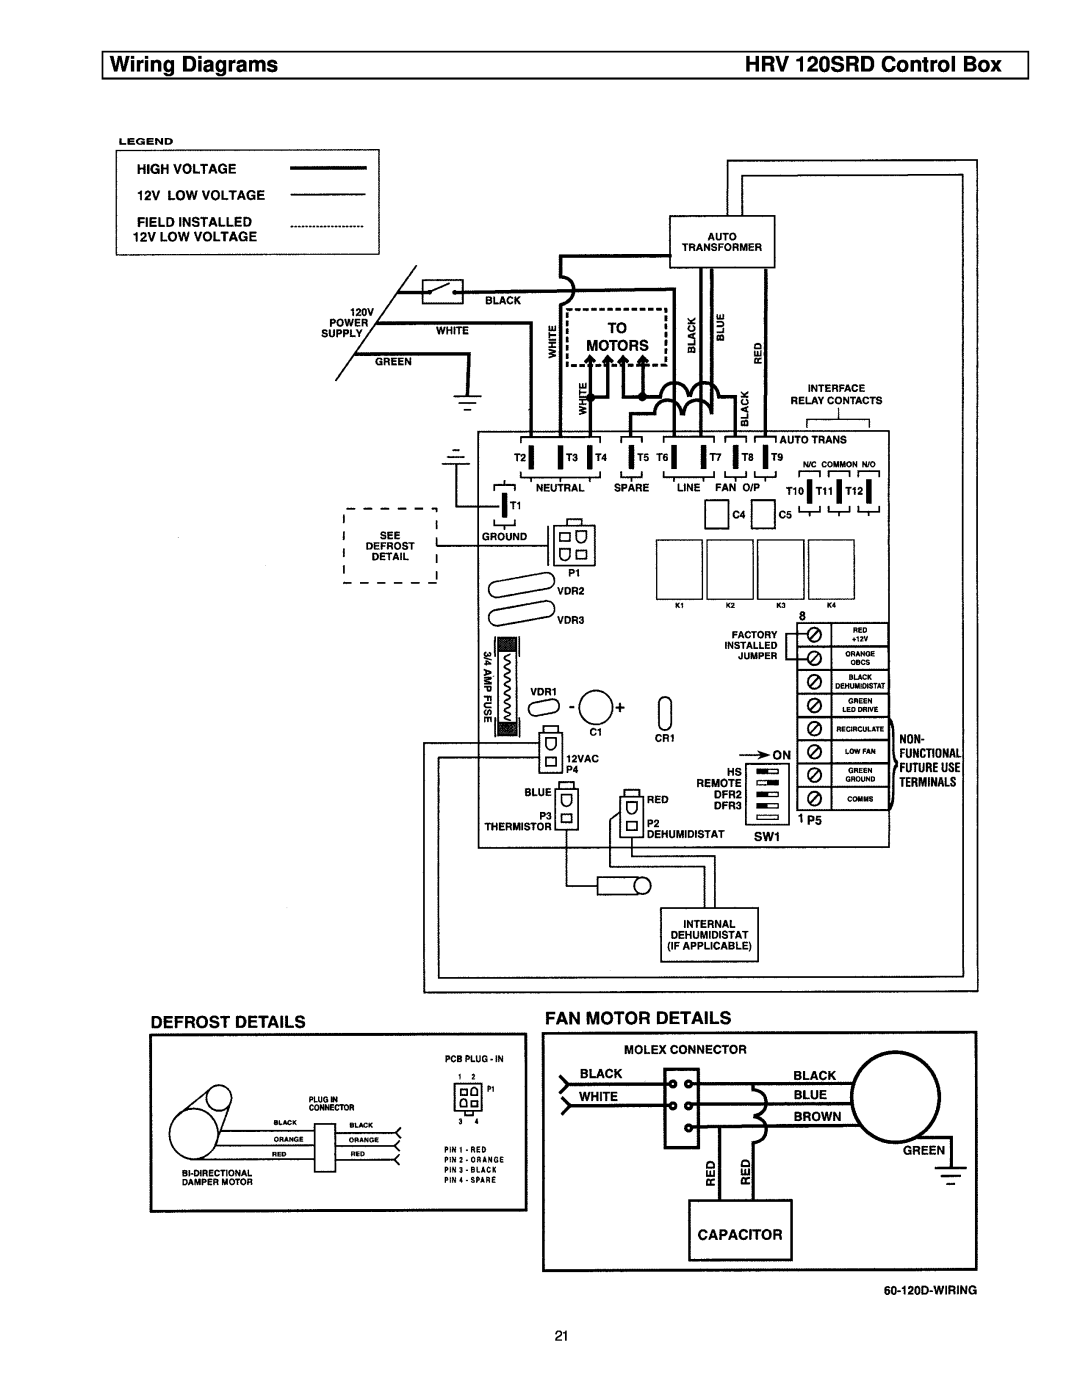 American Aldes manual Wiring Diagrams, HRV 120SRD Control Box 